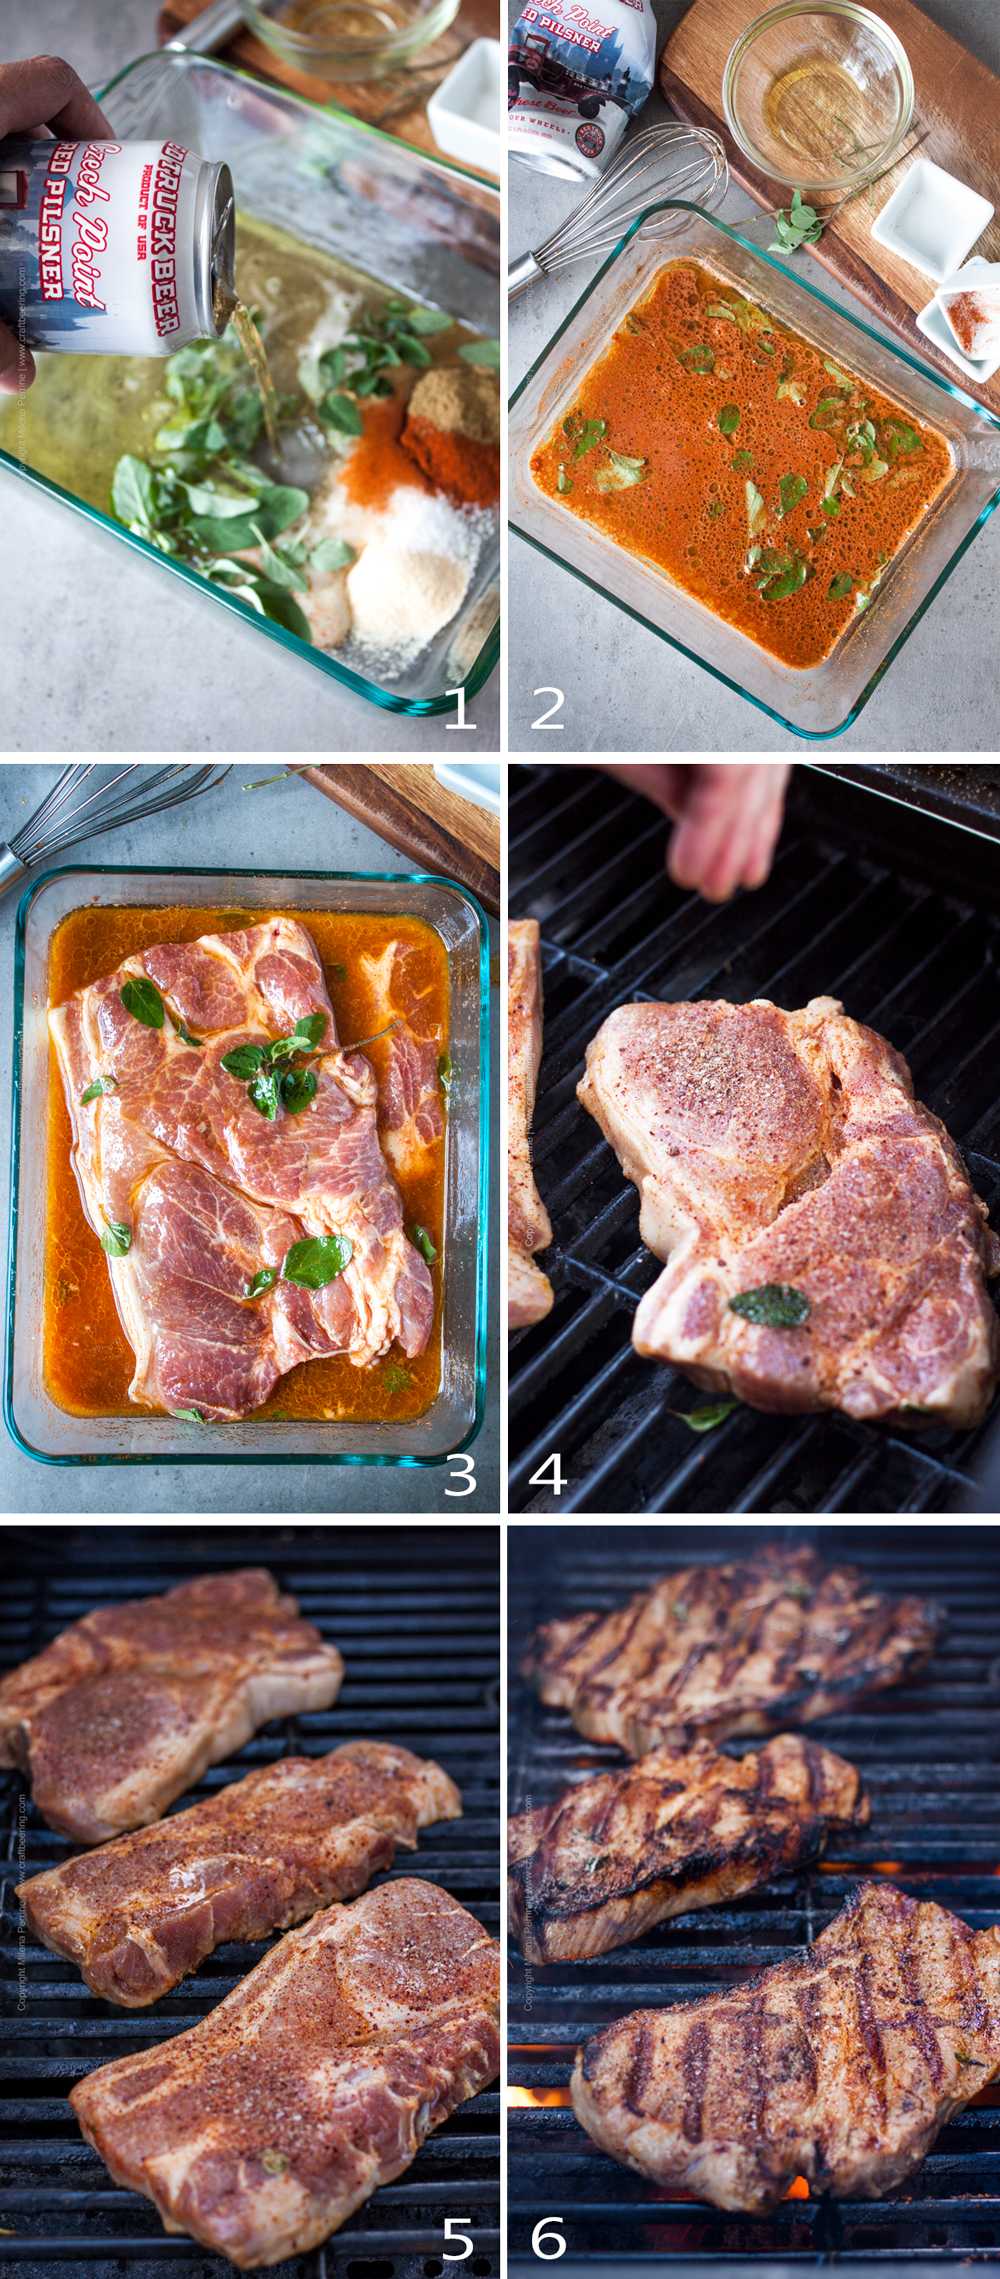 How to cook pork shoulder steak on the grill. Grilled pork steak step-by-step. 